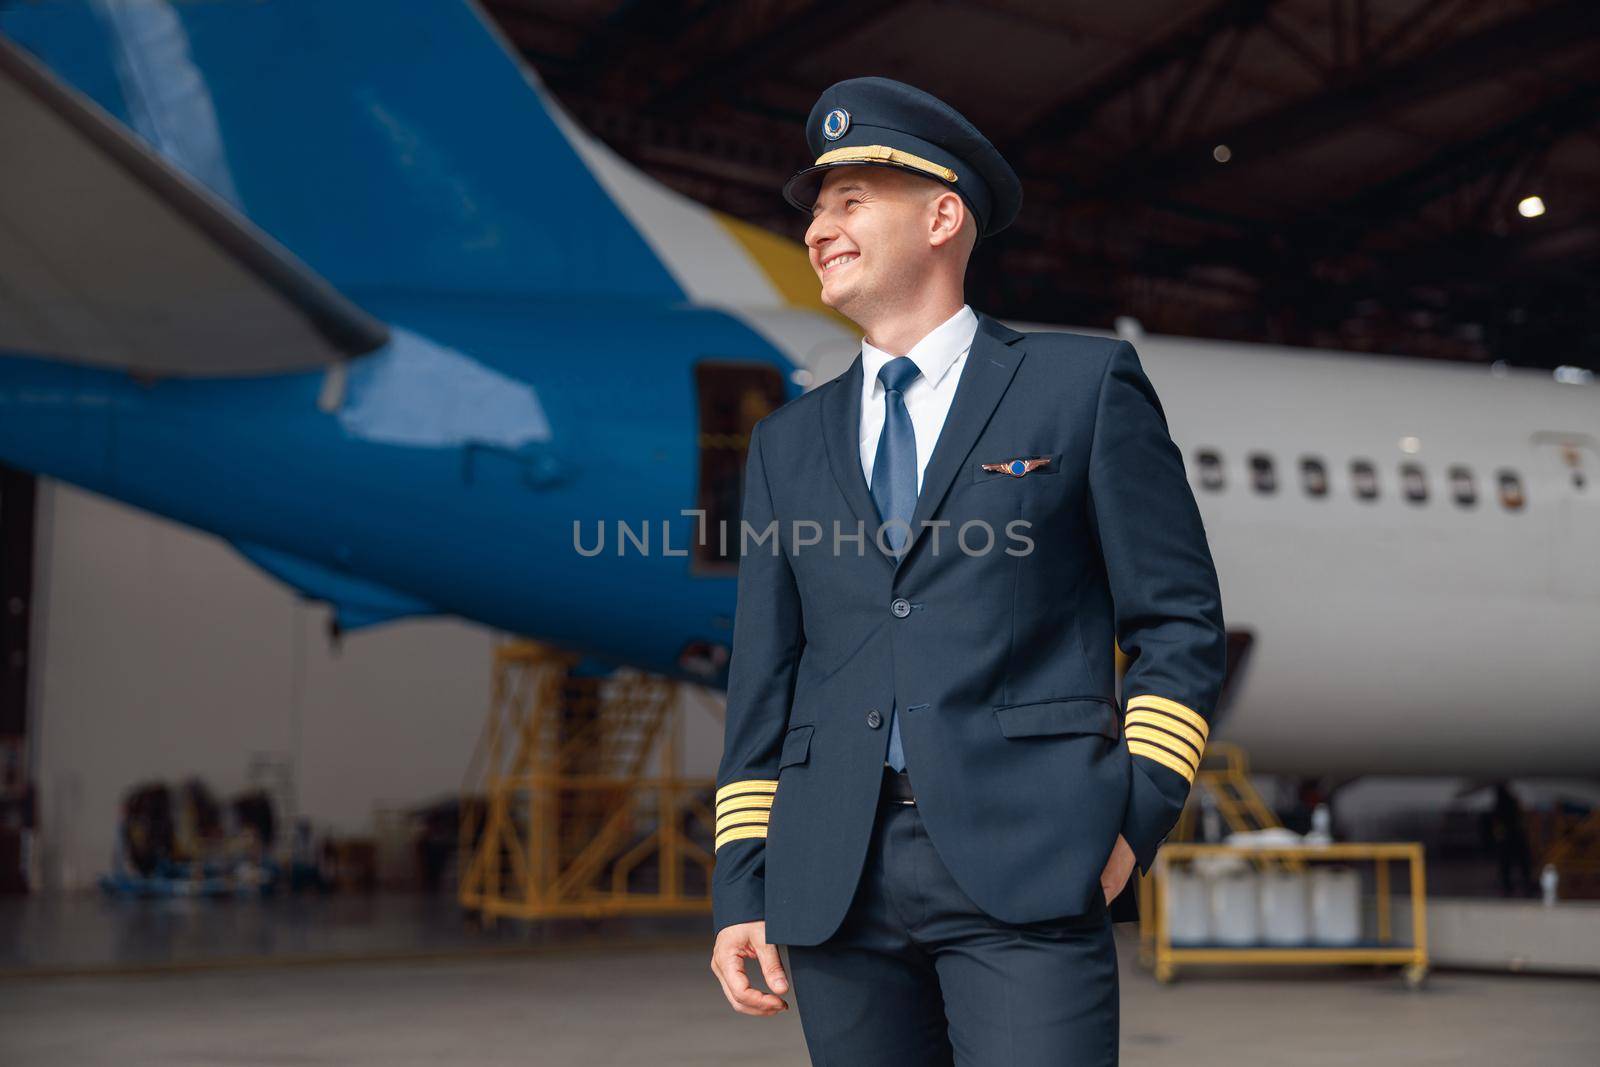 Cheerful pilot in uniform smiling away, standing in front of big passenger airplane in airport hangar by Yaroslav_astakhov